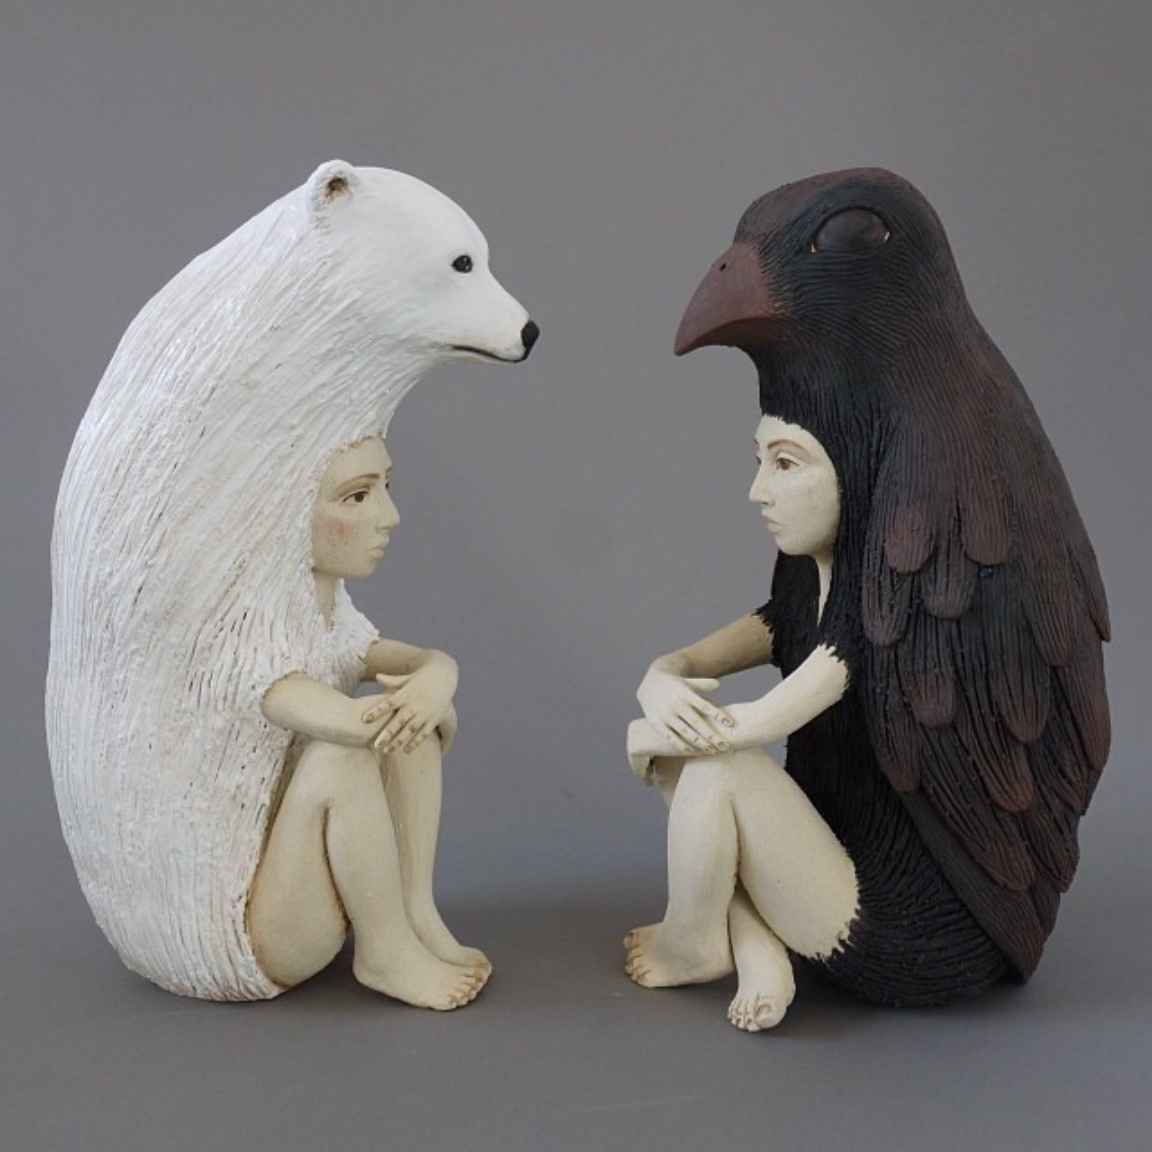 Crystal Morey's Striking Ceramic Sculptures Of Human Animal Hybrids (2)